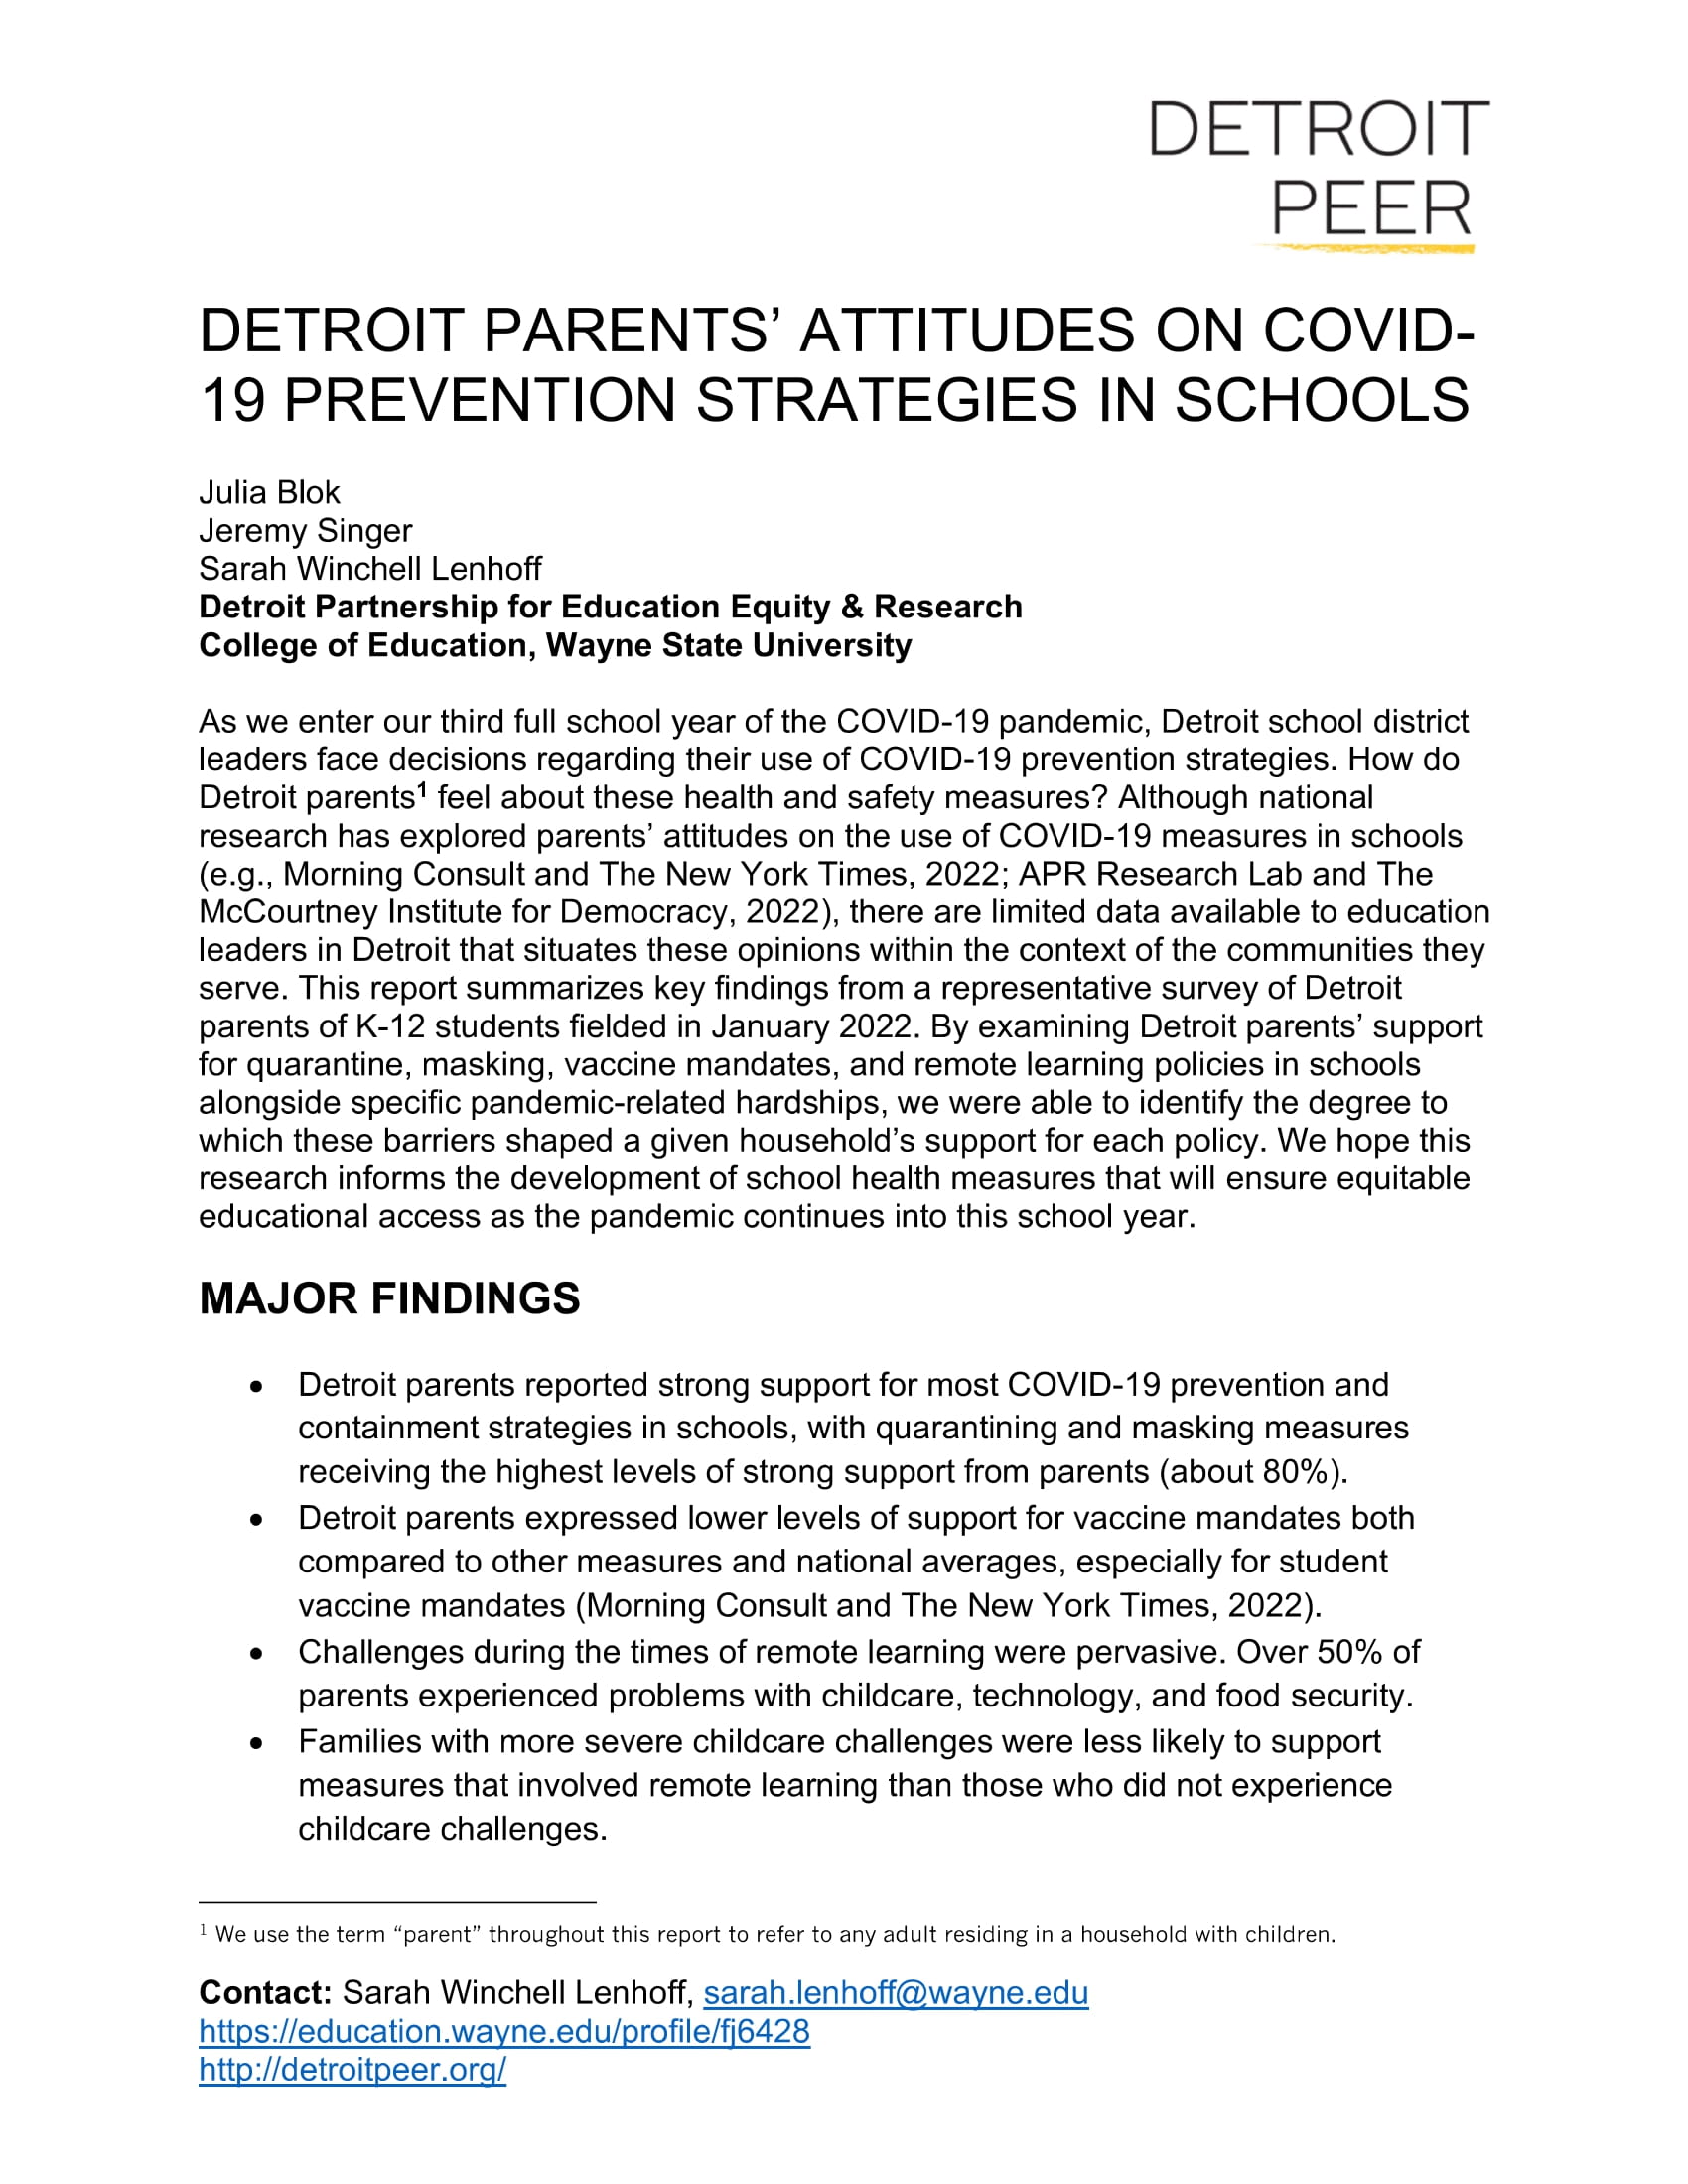 Detroit Parents' Attitudes on COVID-19 Prevention Strategies in Schools